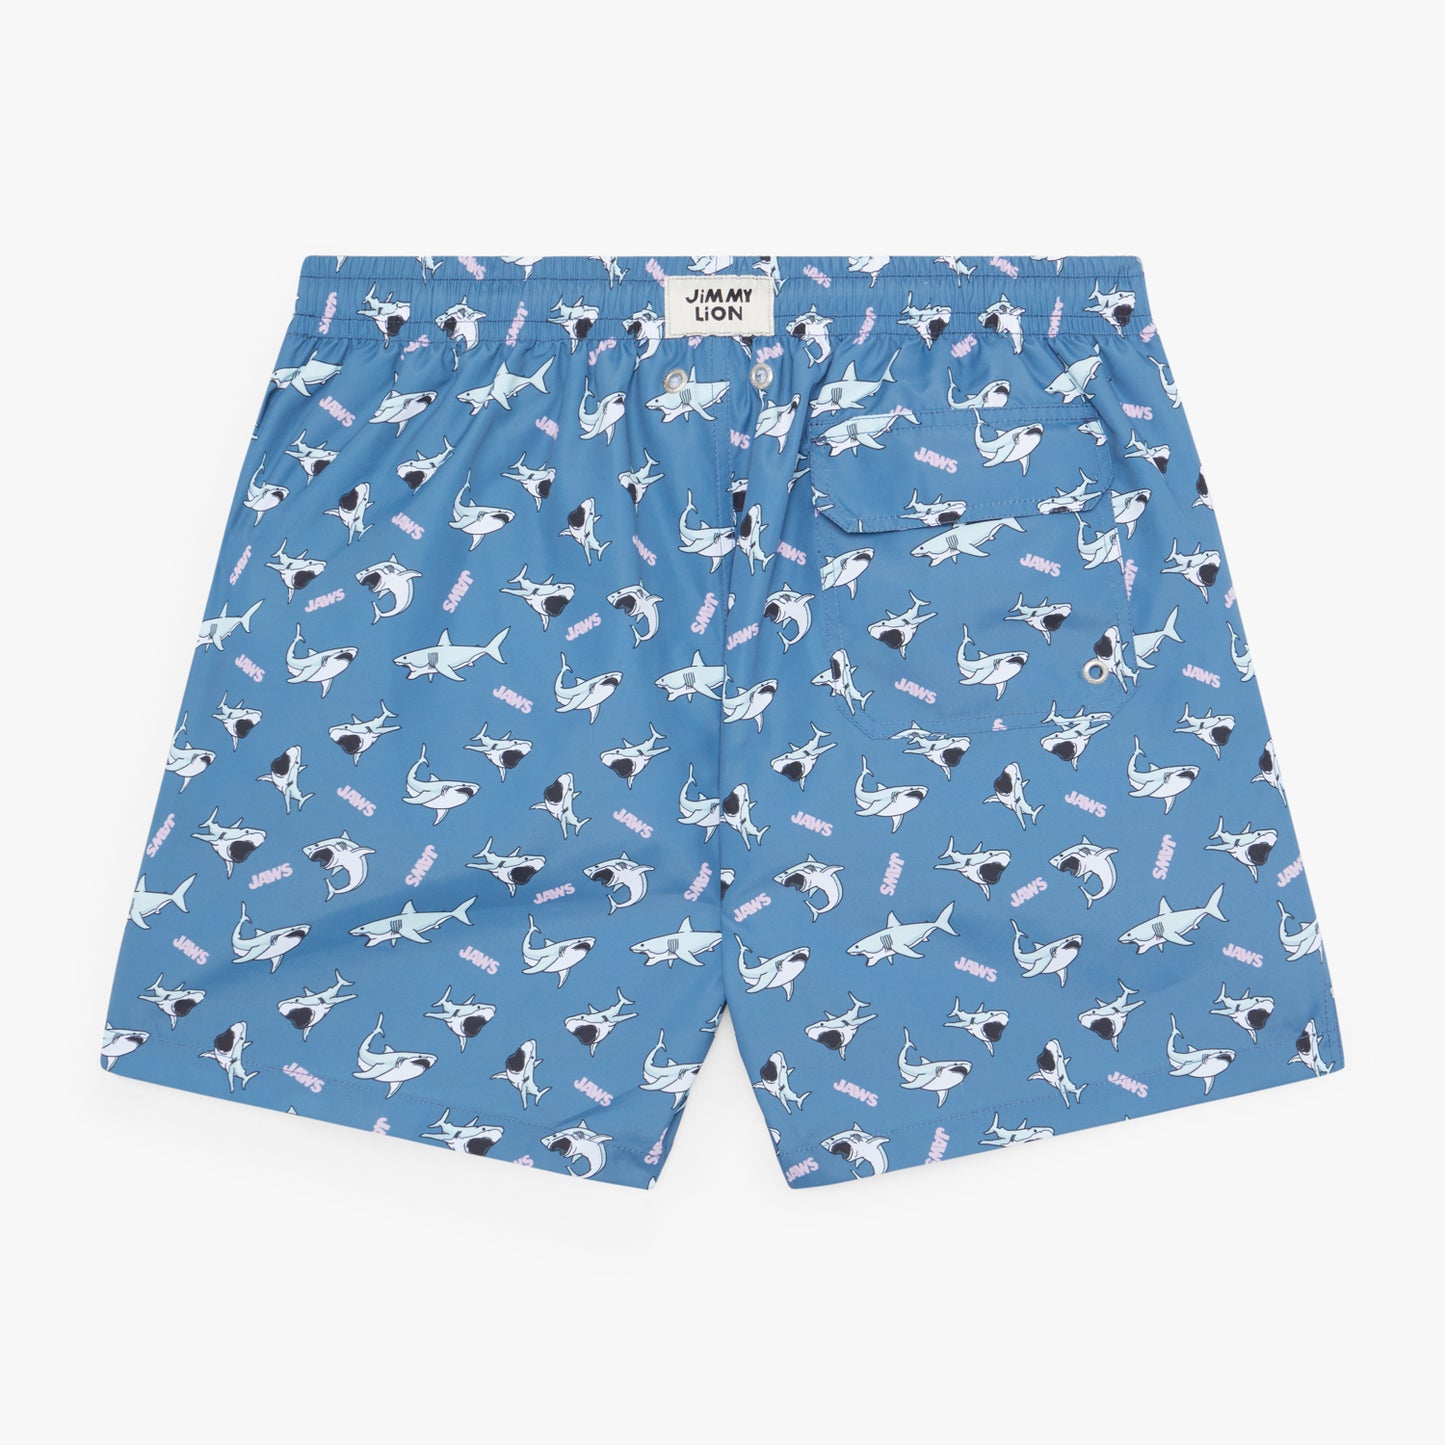 Jaws II Swim Shorts - Dark Blue (1)